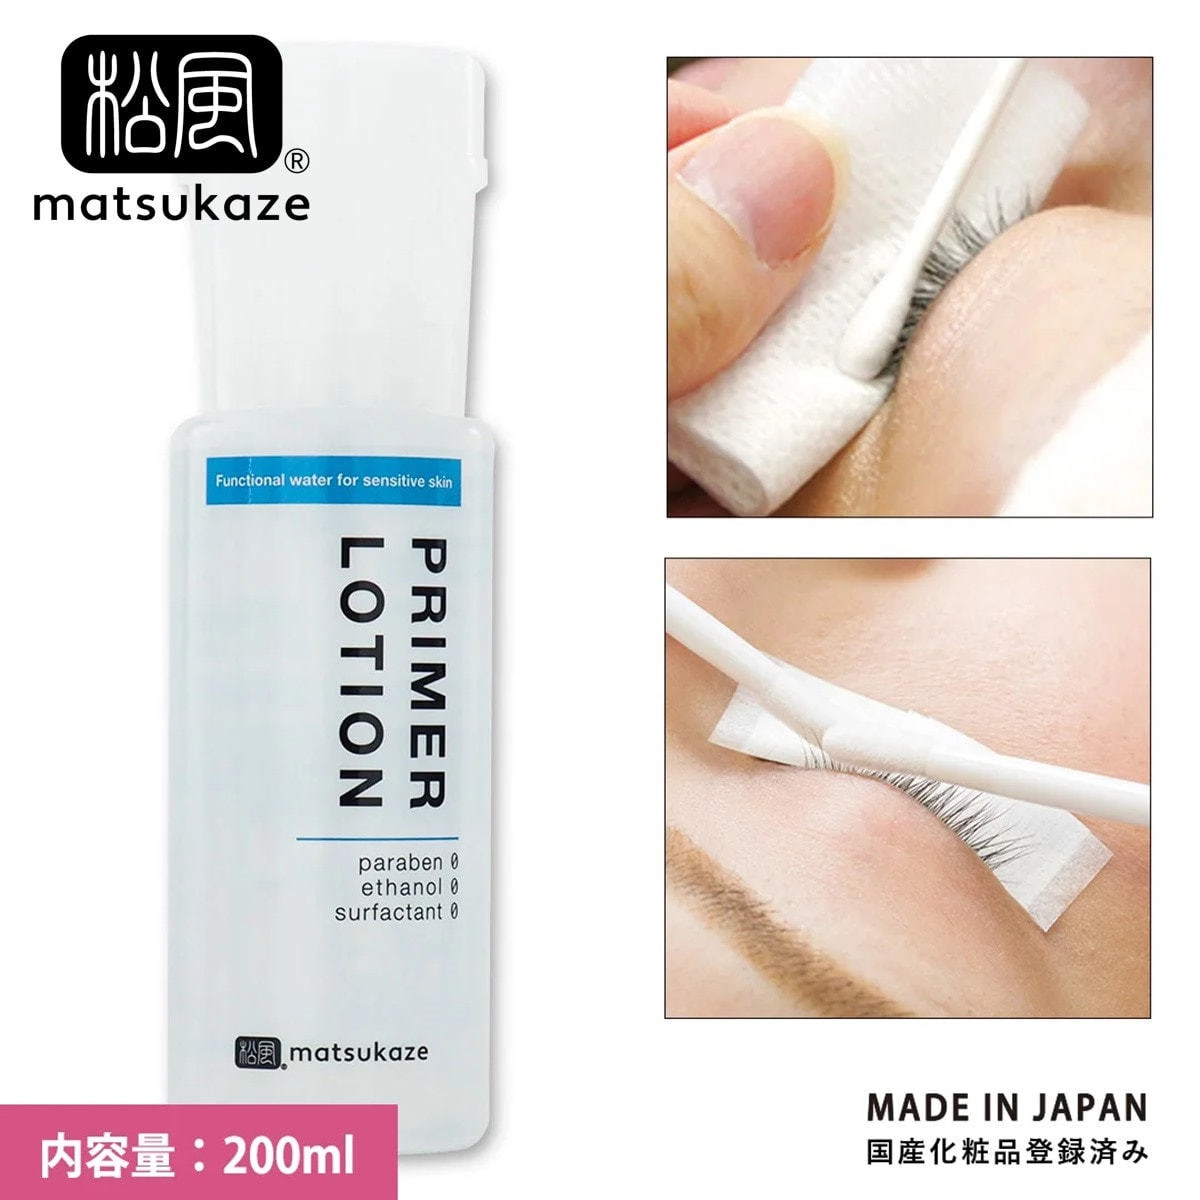 【matsukaze】Pre-treated functional water (for sensitive skin) 200ml